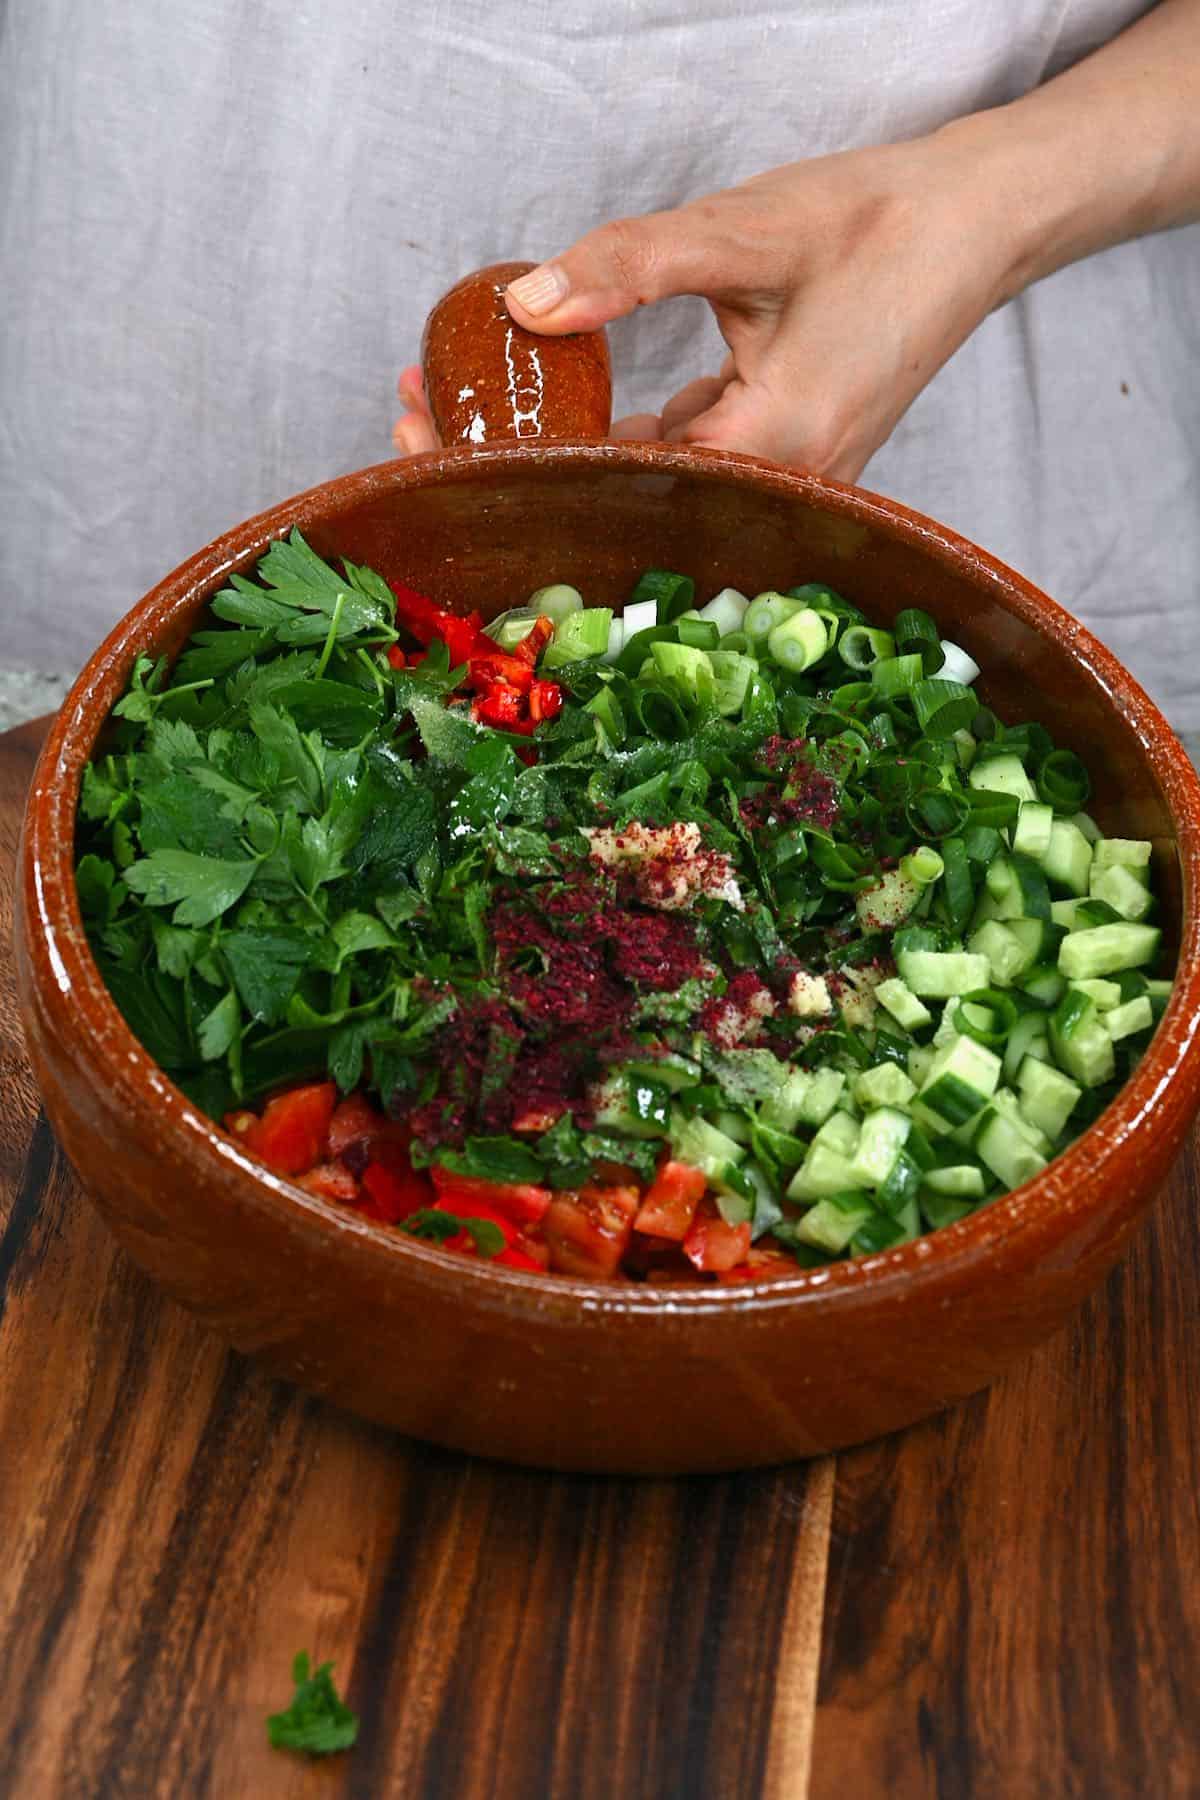 Salad ingredients in a bowl